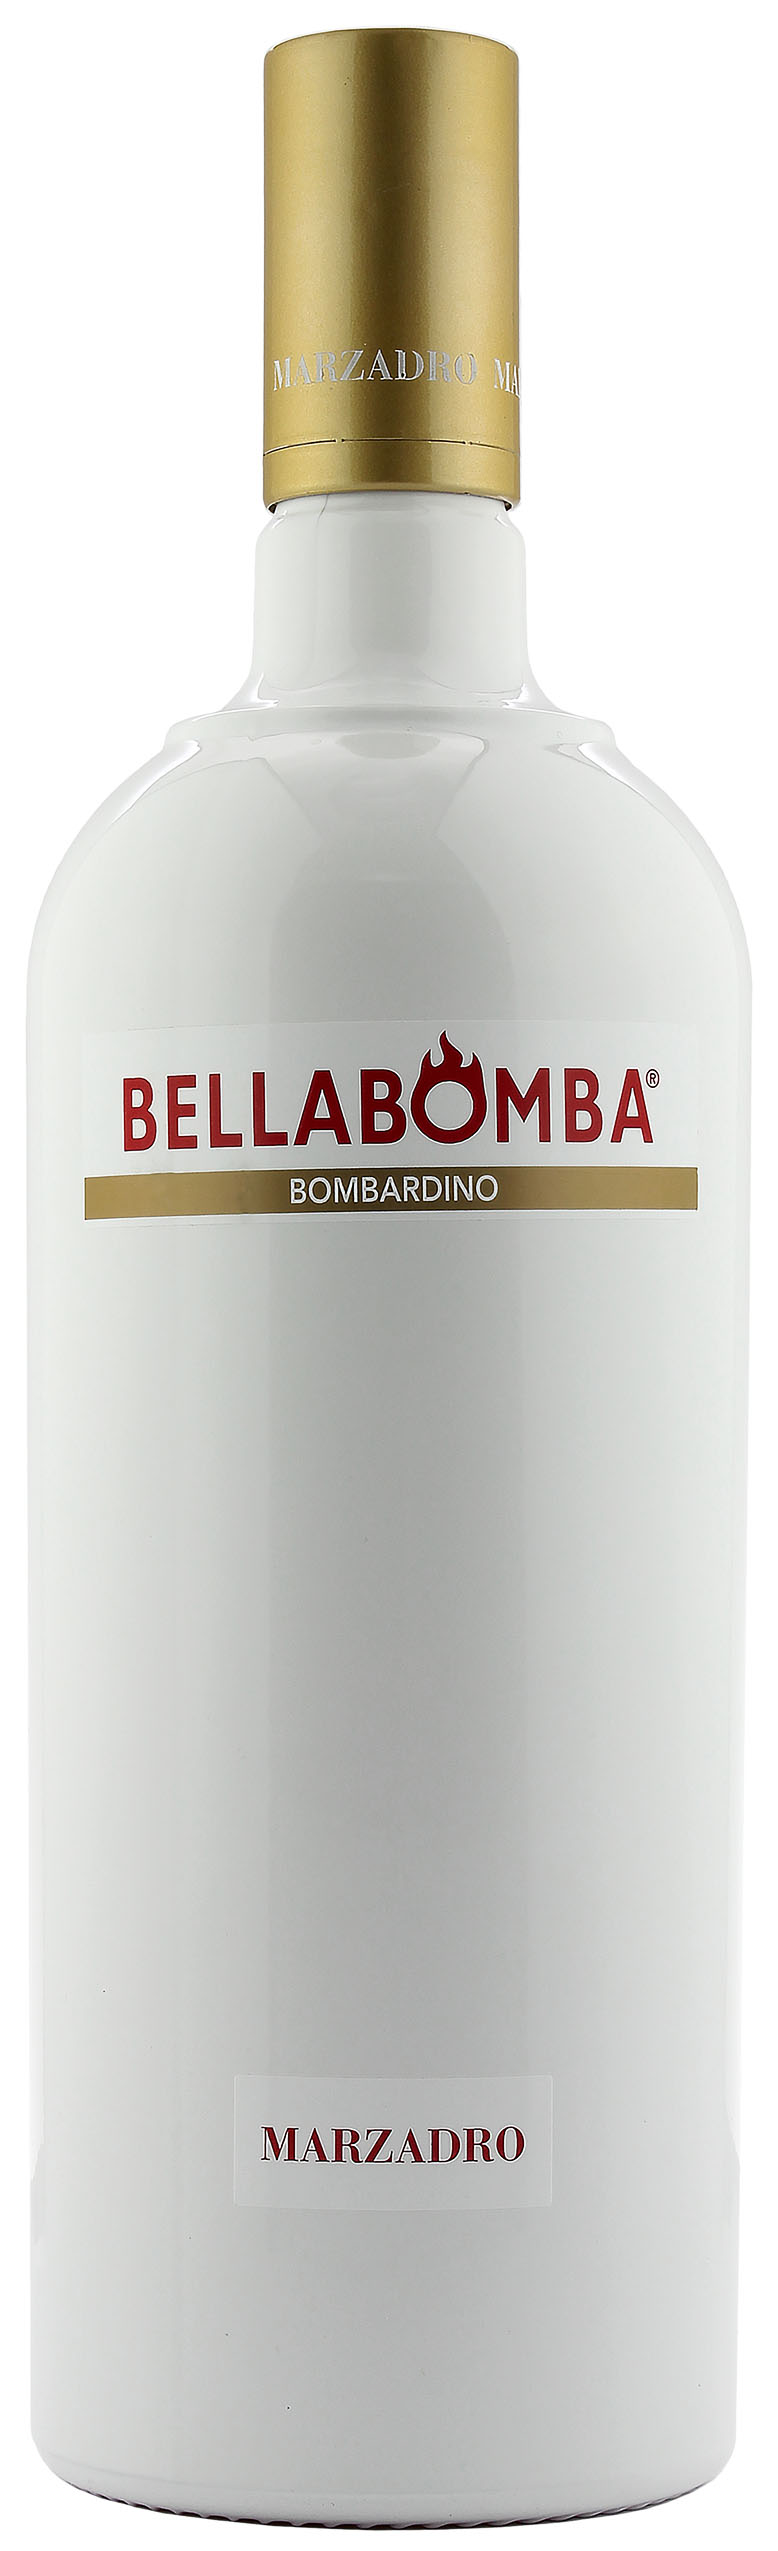 BellaBomba Bombardino 17.0% 1 Liter